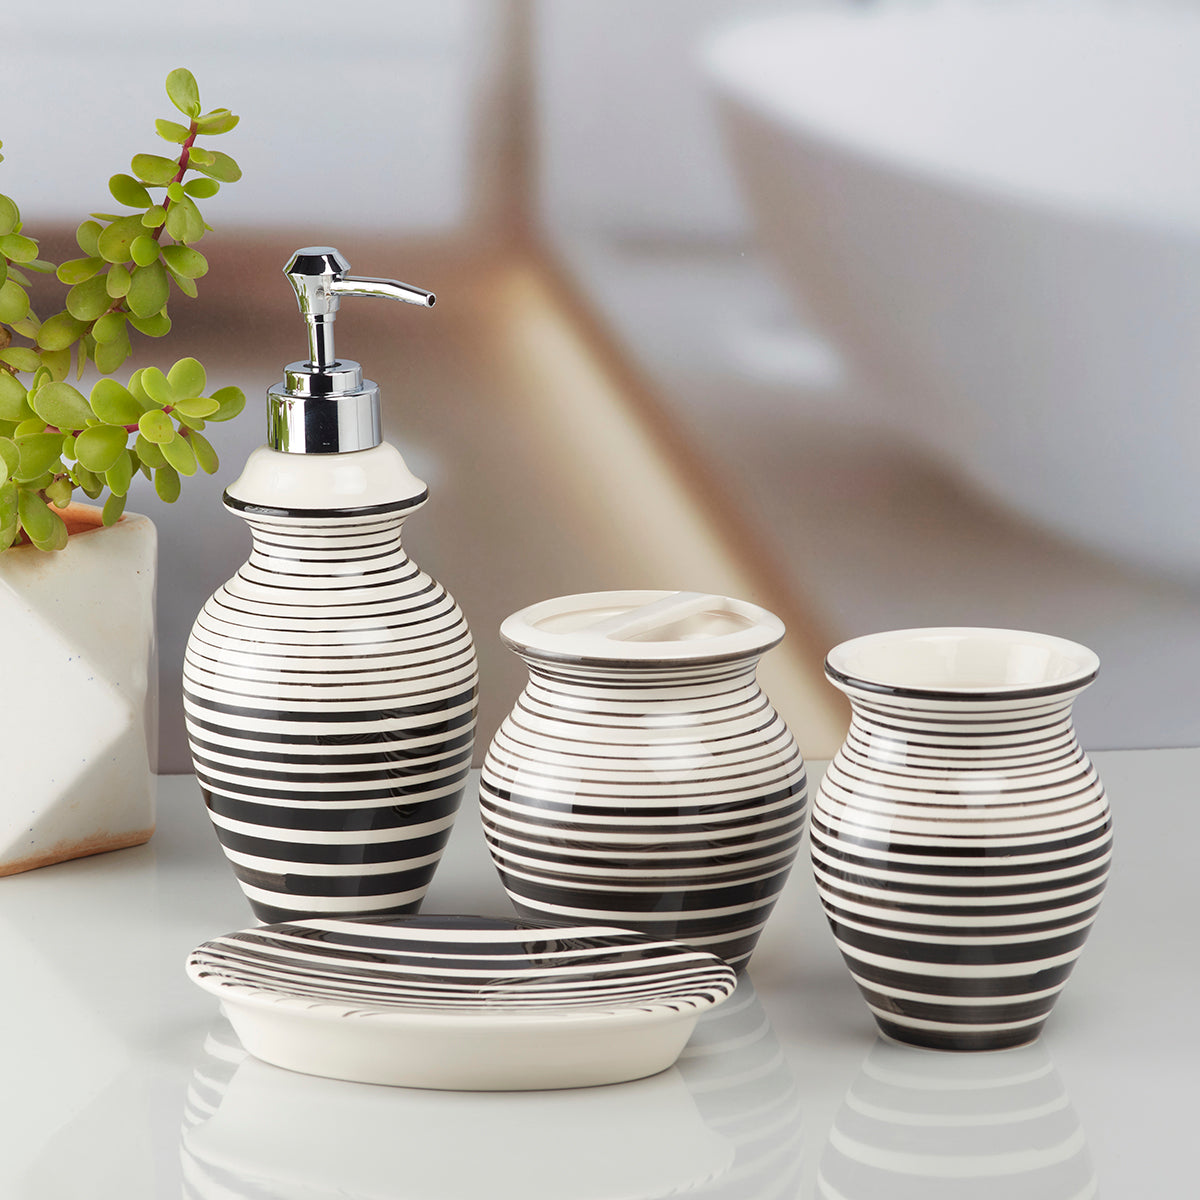 Ceramic Bathroom Accessories Set of 4 Bath Set with Soap Dispenser (10188)